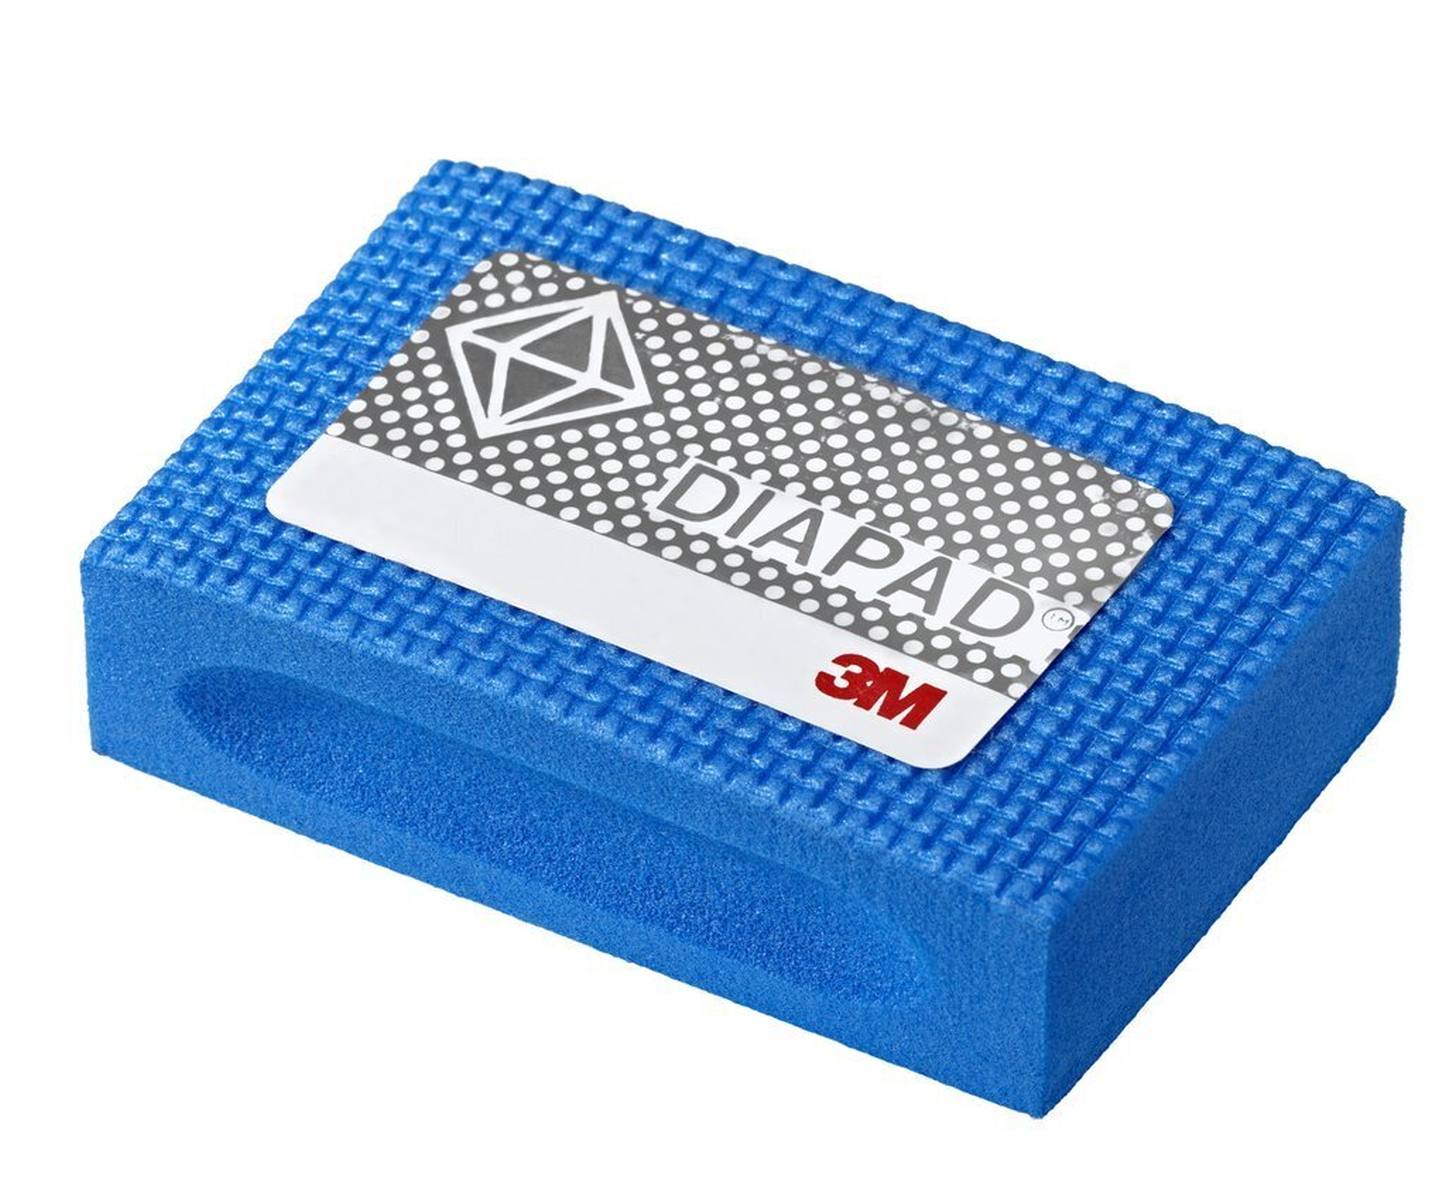 3M Handschleifklotz Flexible Diamant 6200J, 55 mm x 90 mm, 25 mm, N10, blau Standard